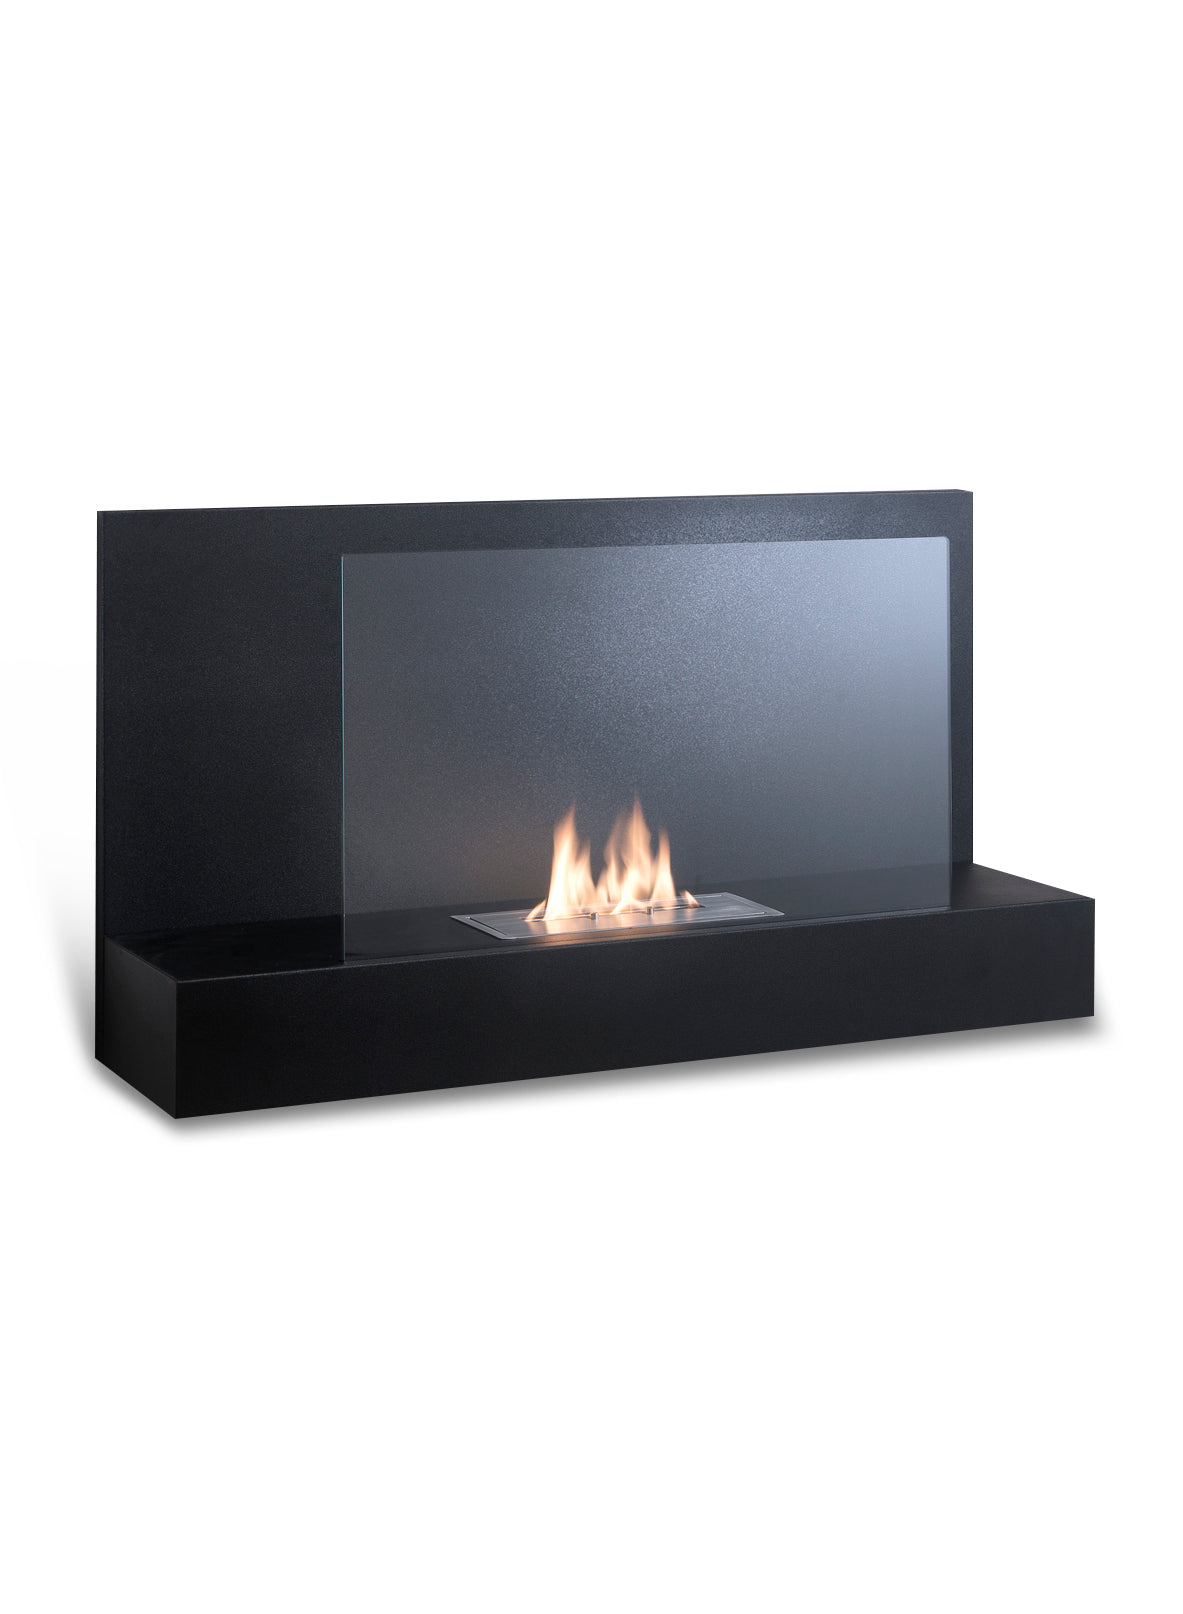 NOIR black wall bioethanol fireplace